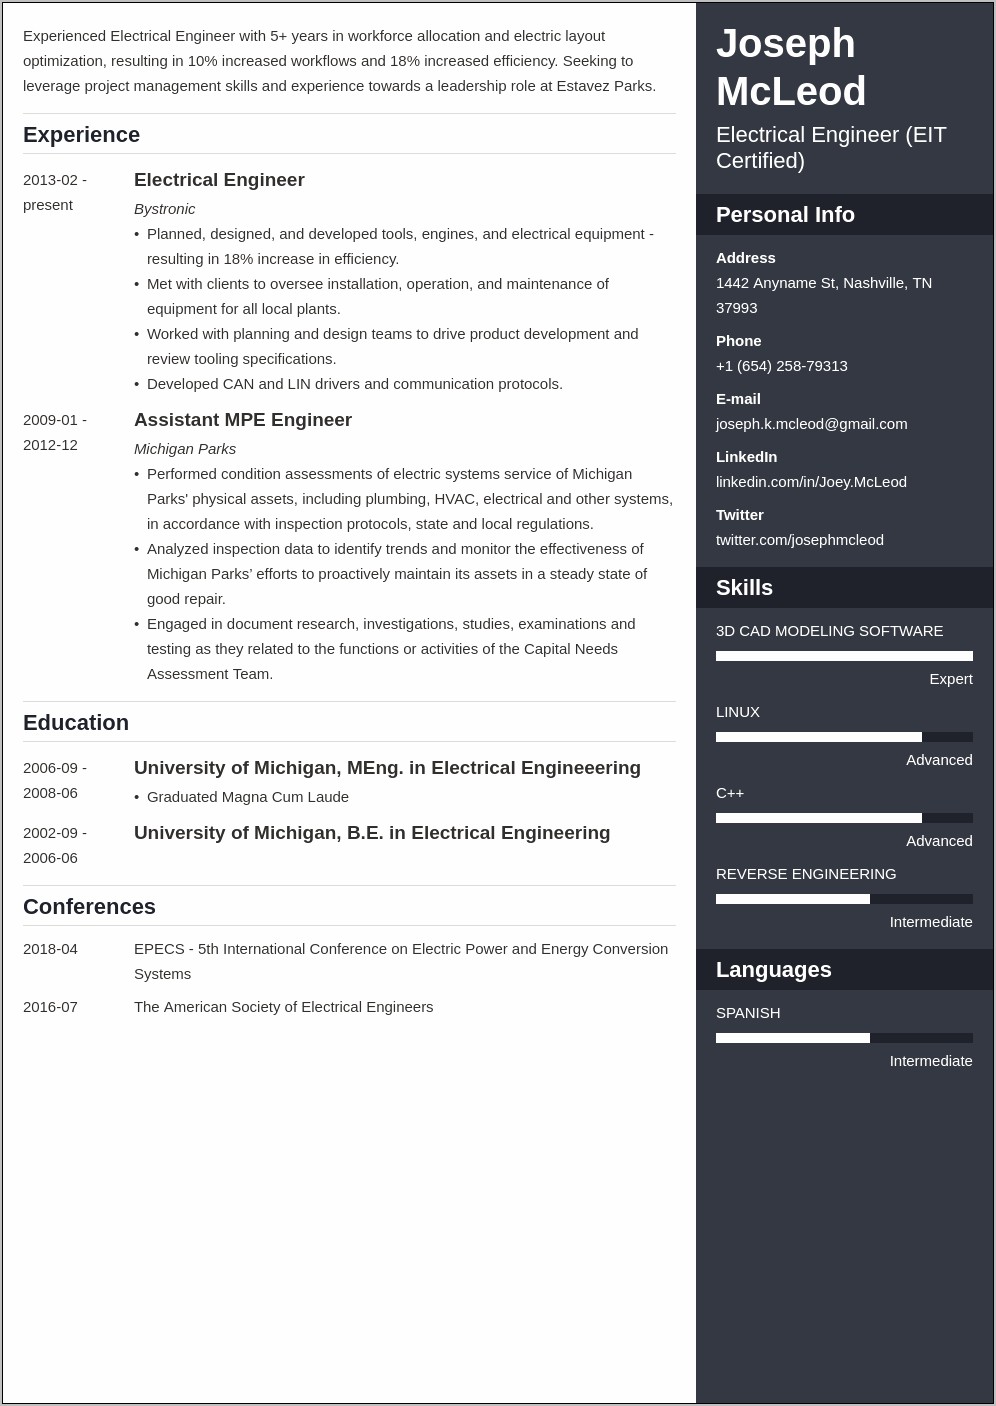 Electrical Engineer Job Description Resume